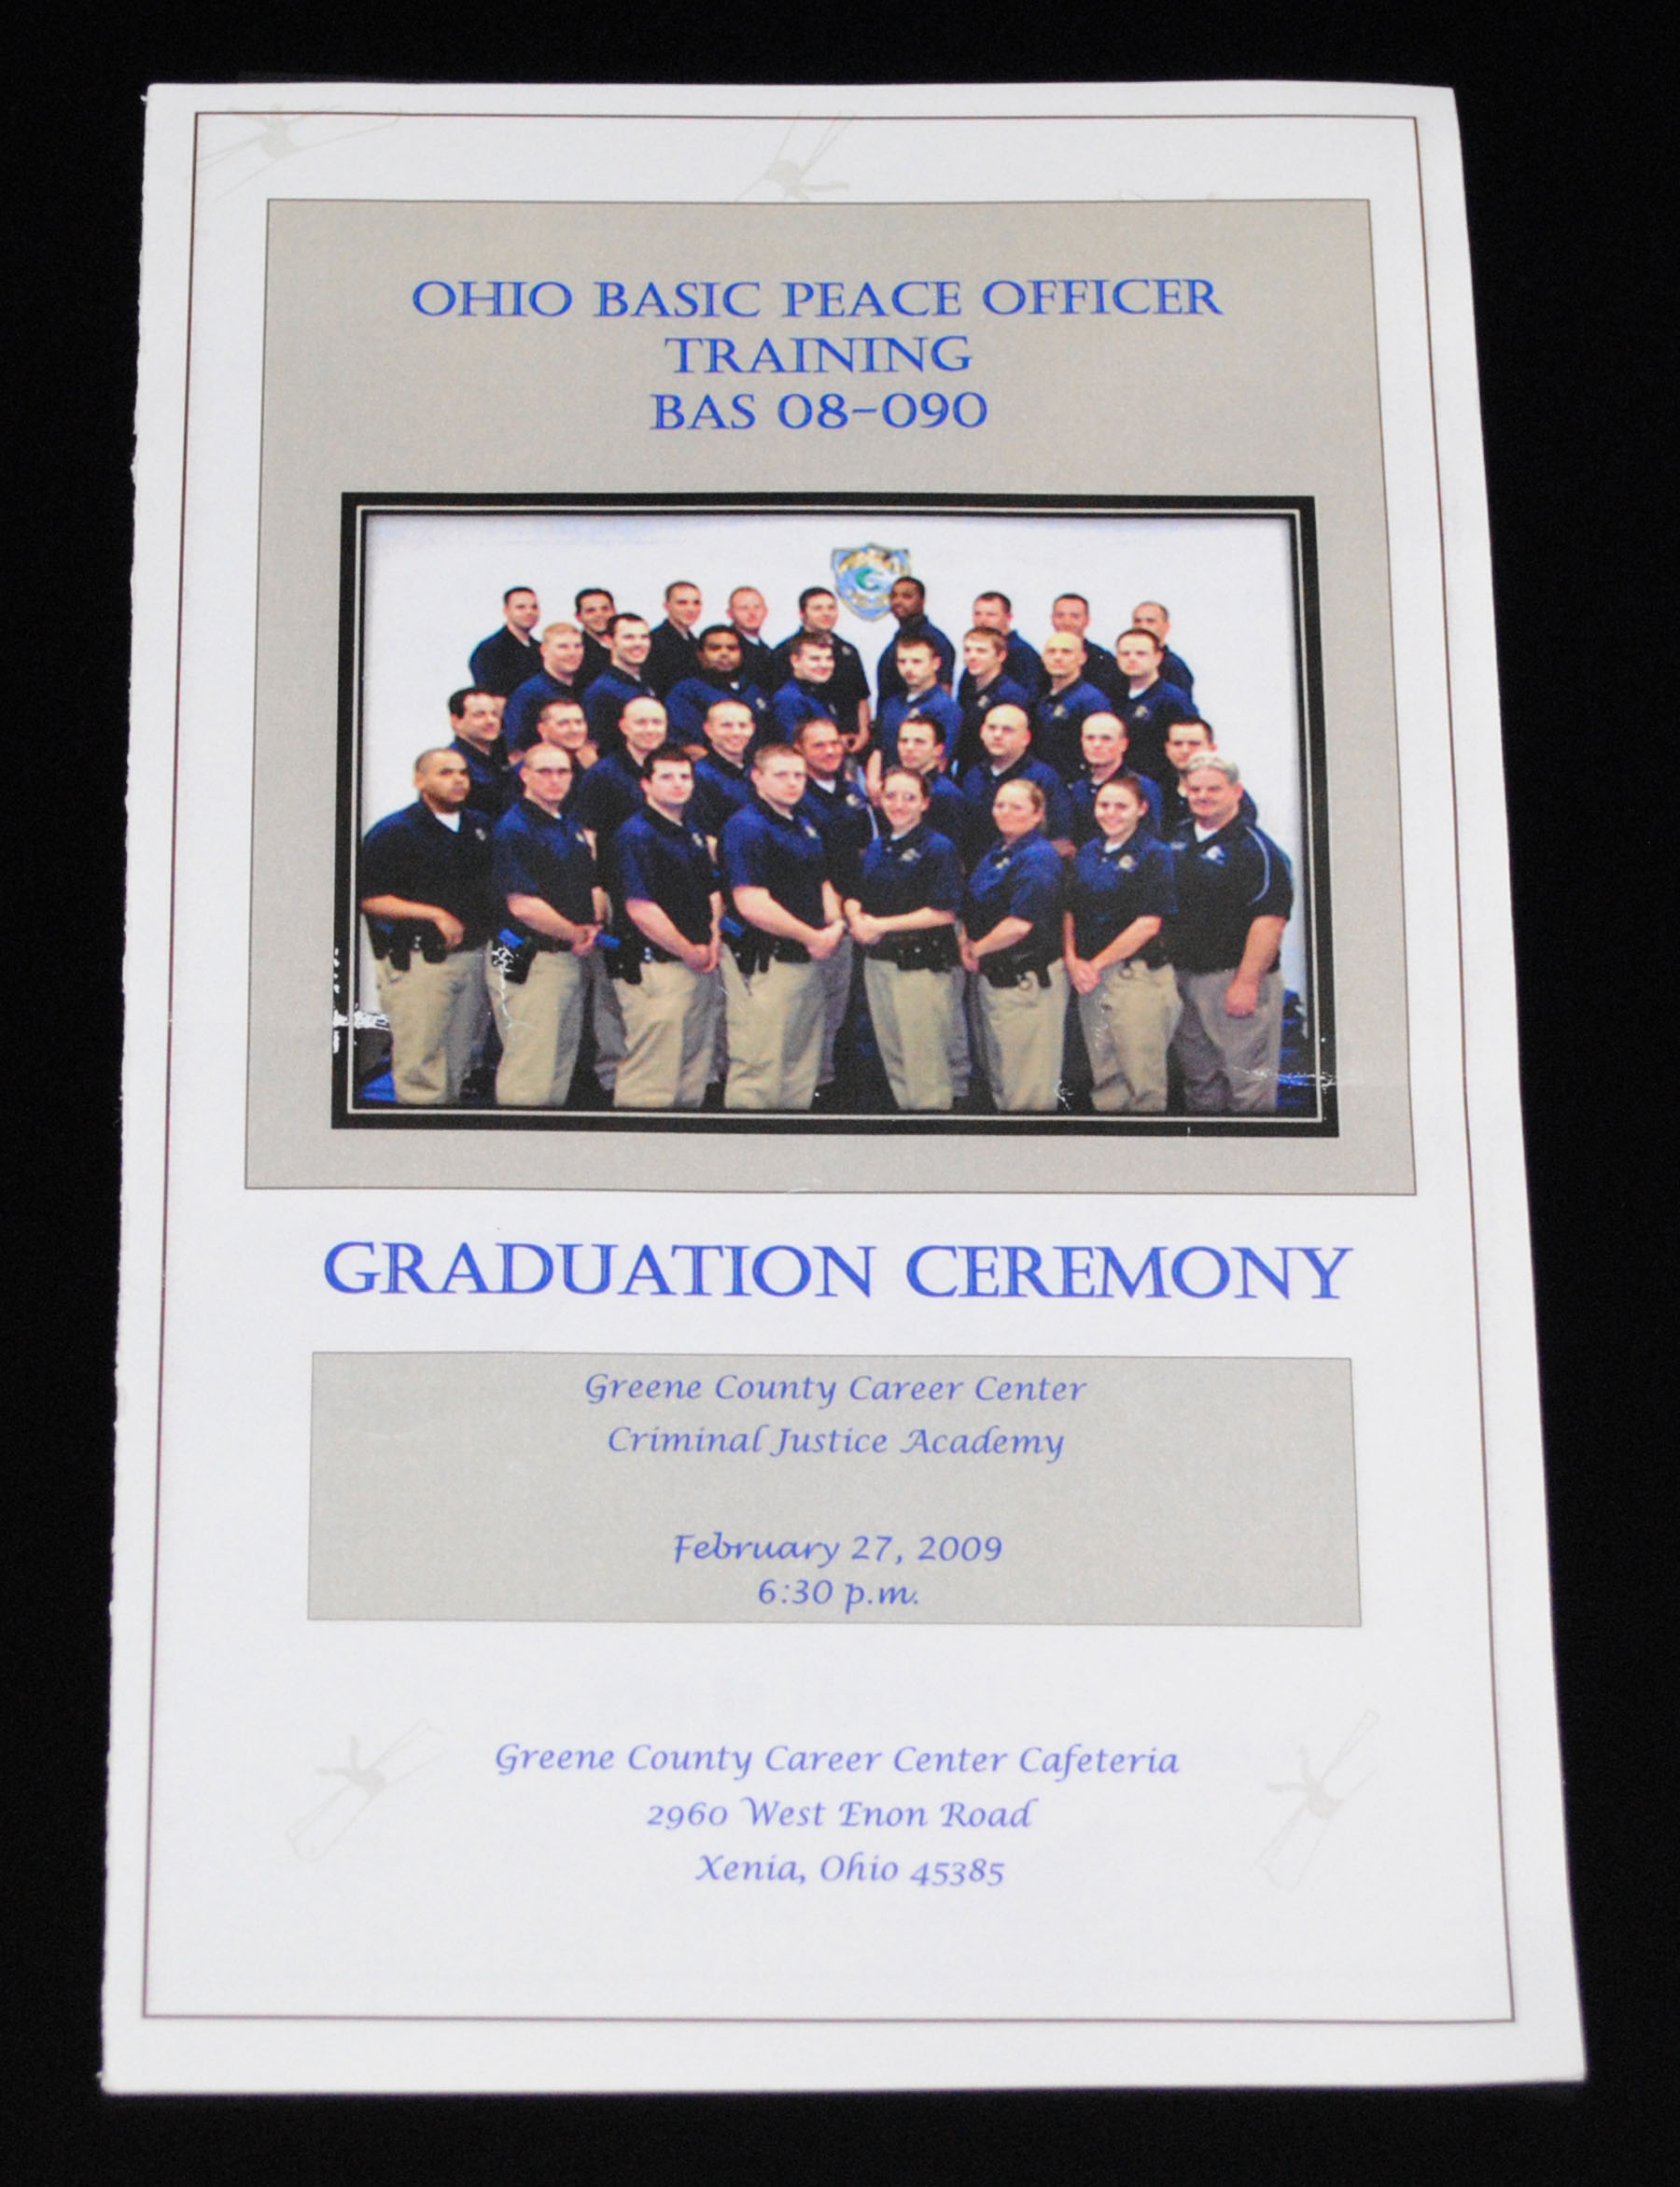 Attorney General Richard Cordray's Ohio Basic Peace Officer Training Graduation Ceremony Program  